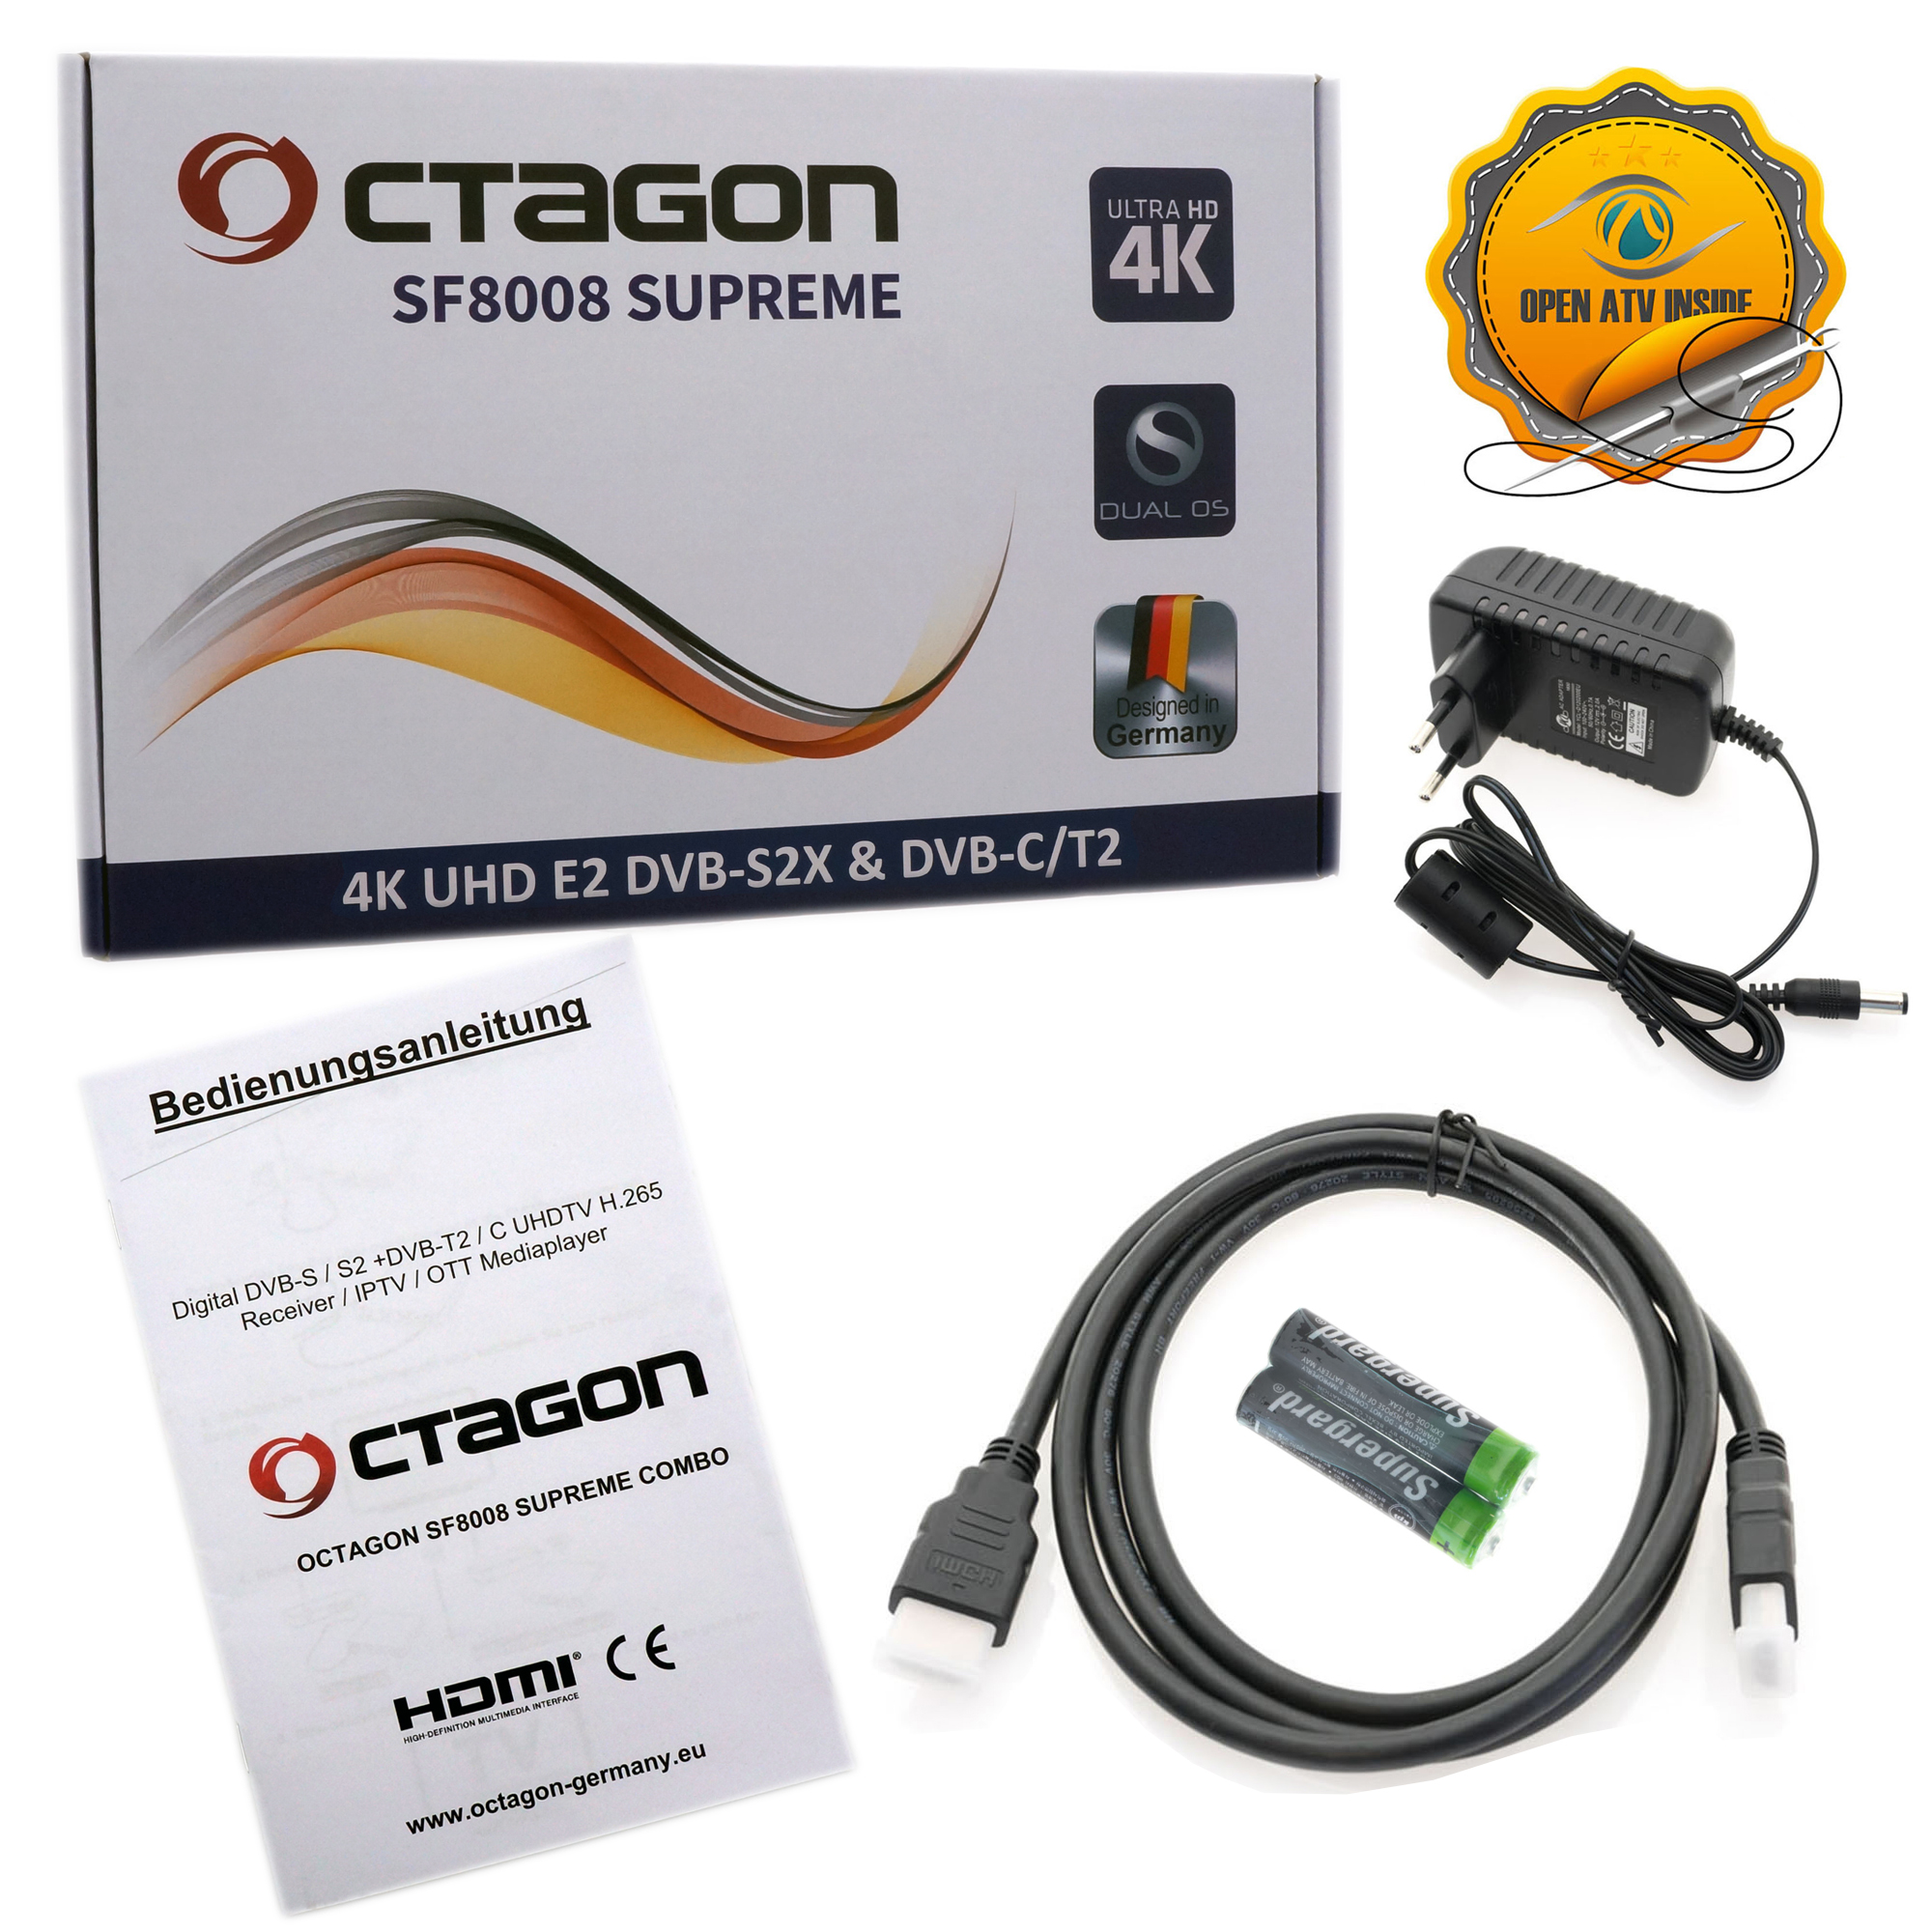 Sat OCTAGON M.2 Schwarz) SF8008 Receiver Linux 4K E2 DVB-C/T2 (Twin UHD SUPREME mit Receiver Tuner, UHD SSD Combo & 4K 4TB DVB-S2X